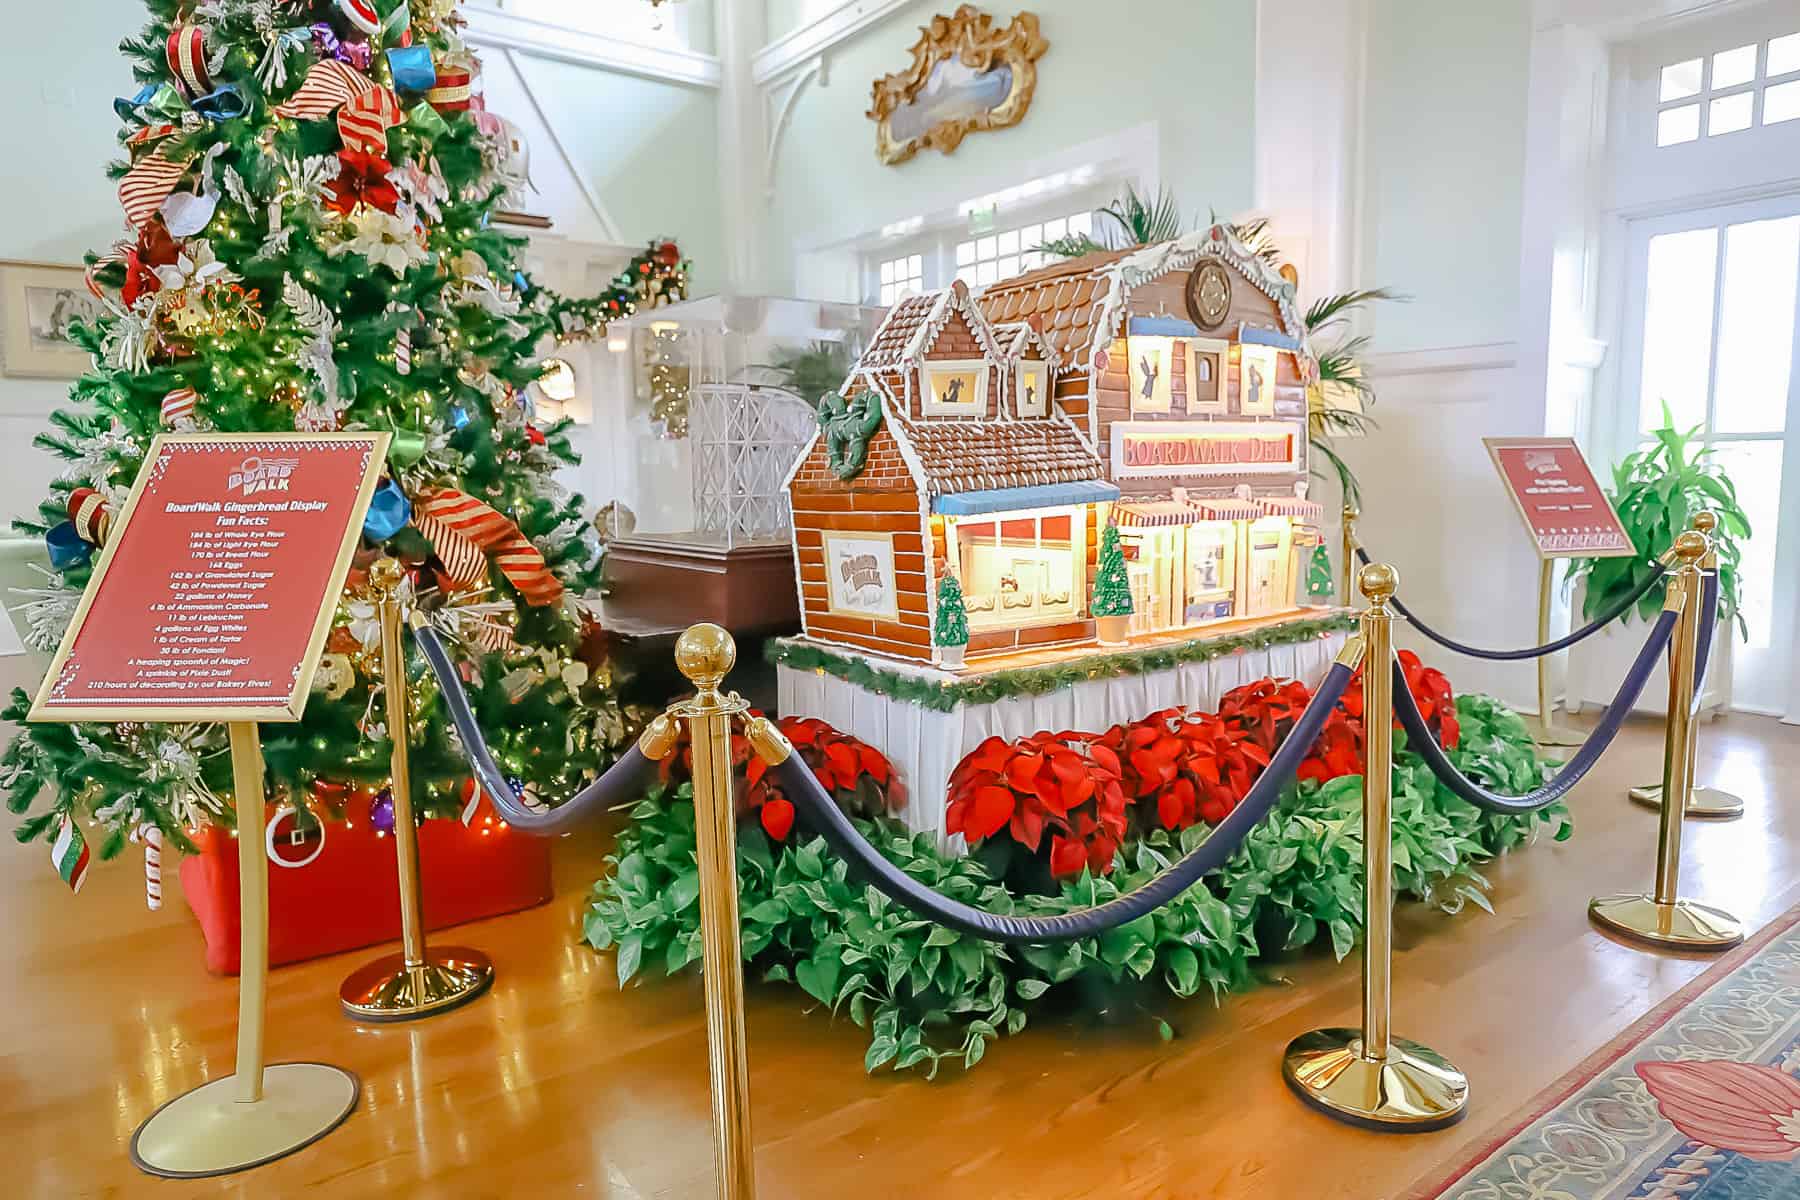 The gingerbread display roped off at Disney's Boardwalk Inn. 